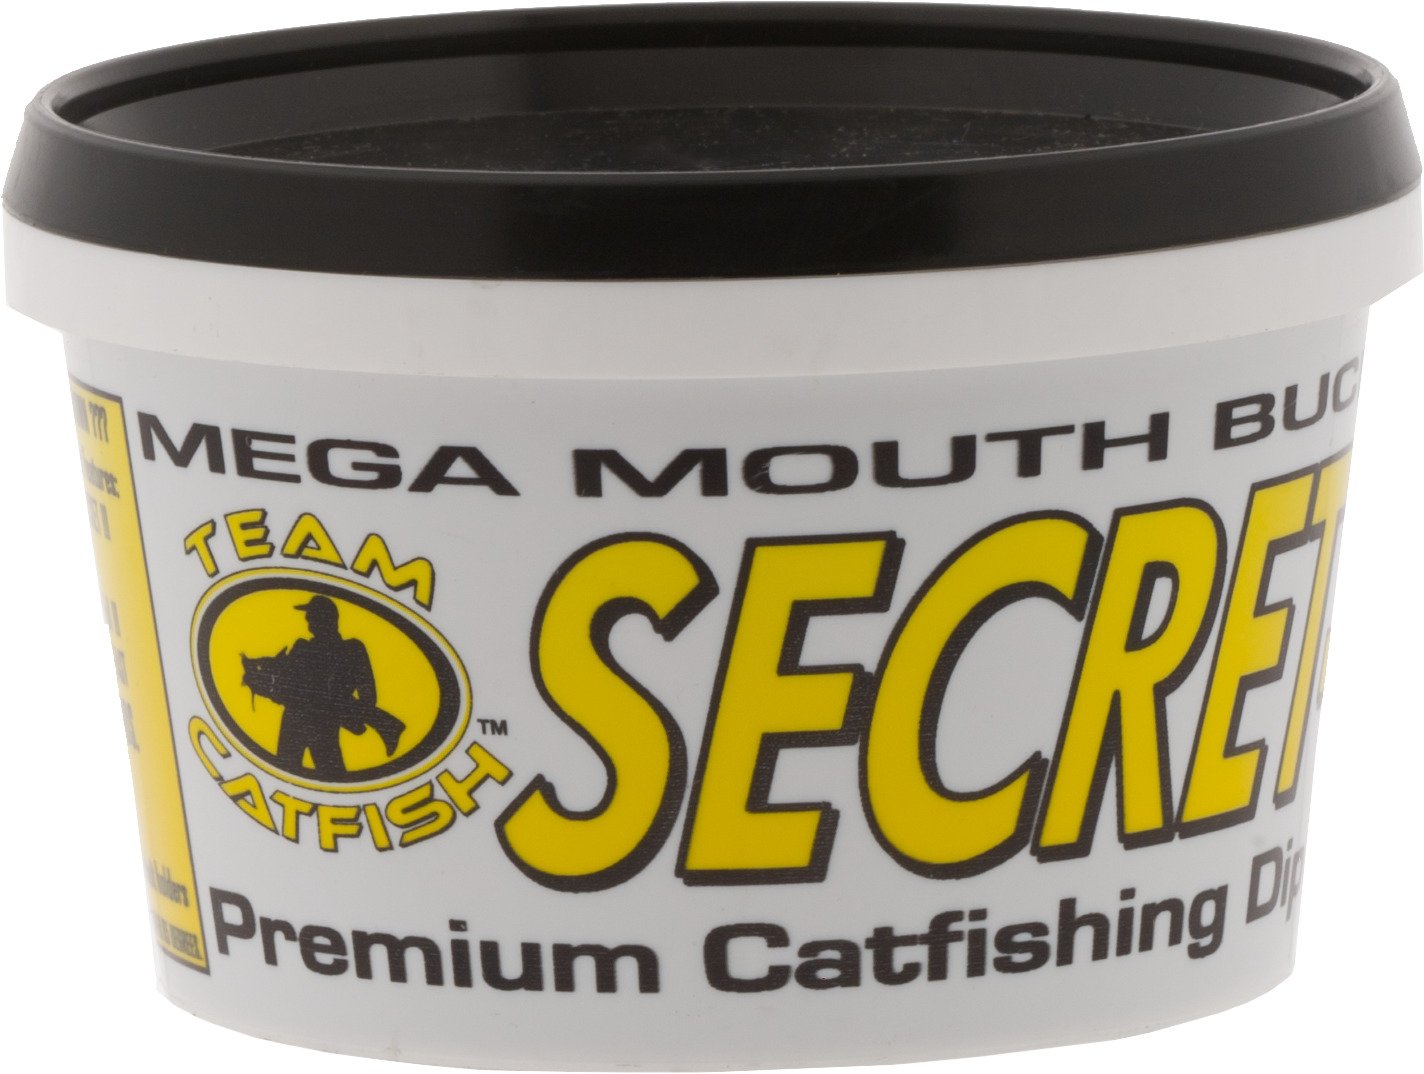 Team Catfish 16 oz. Secret 7 Stink Bait